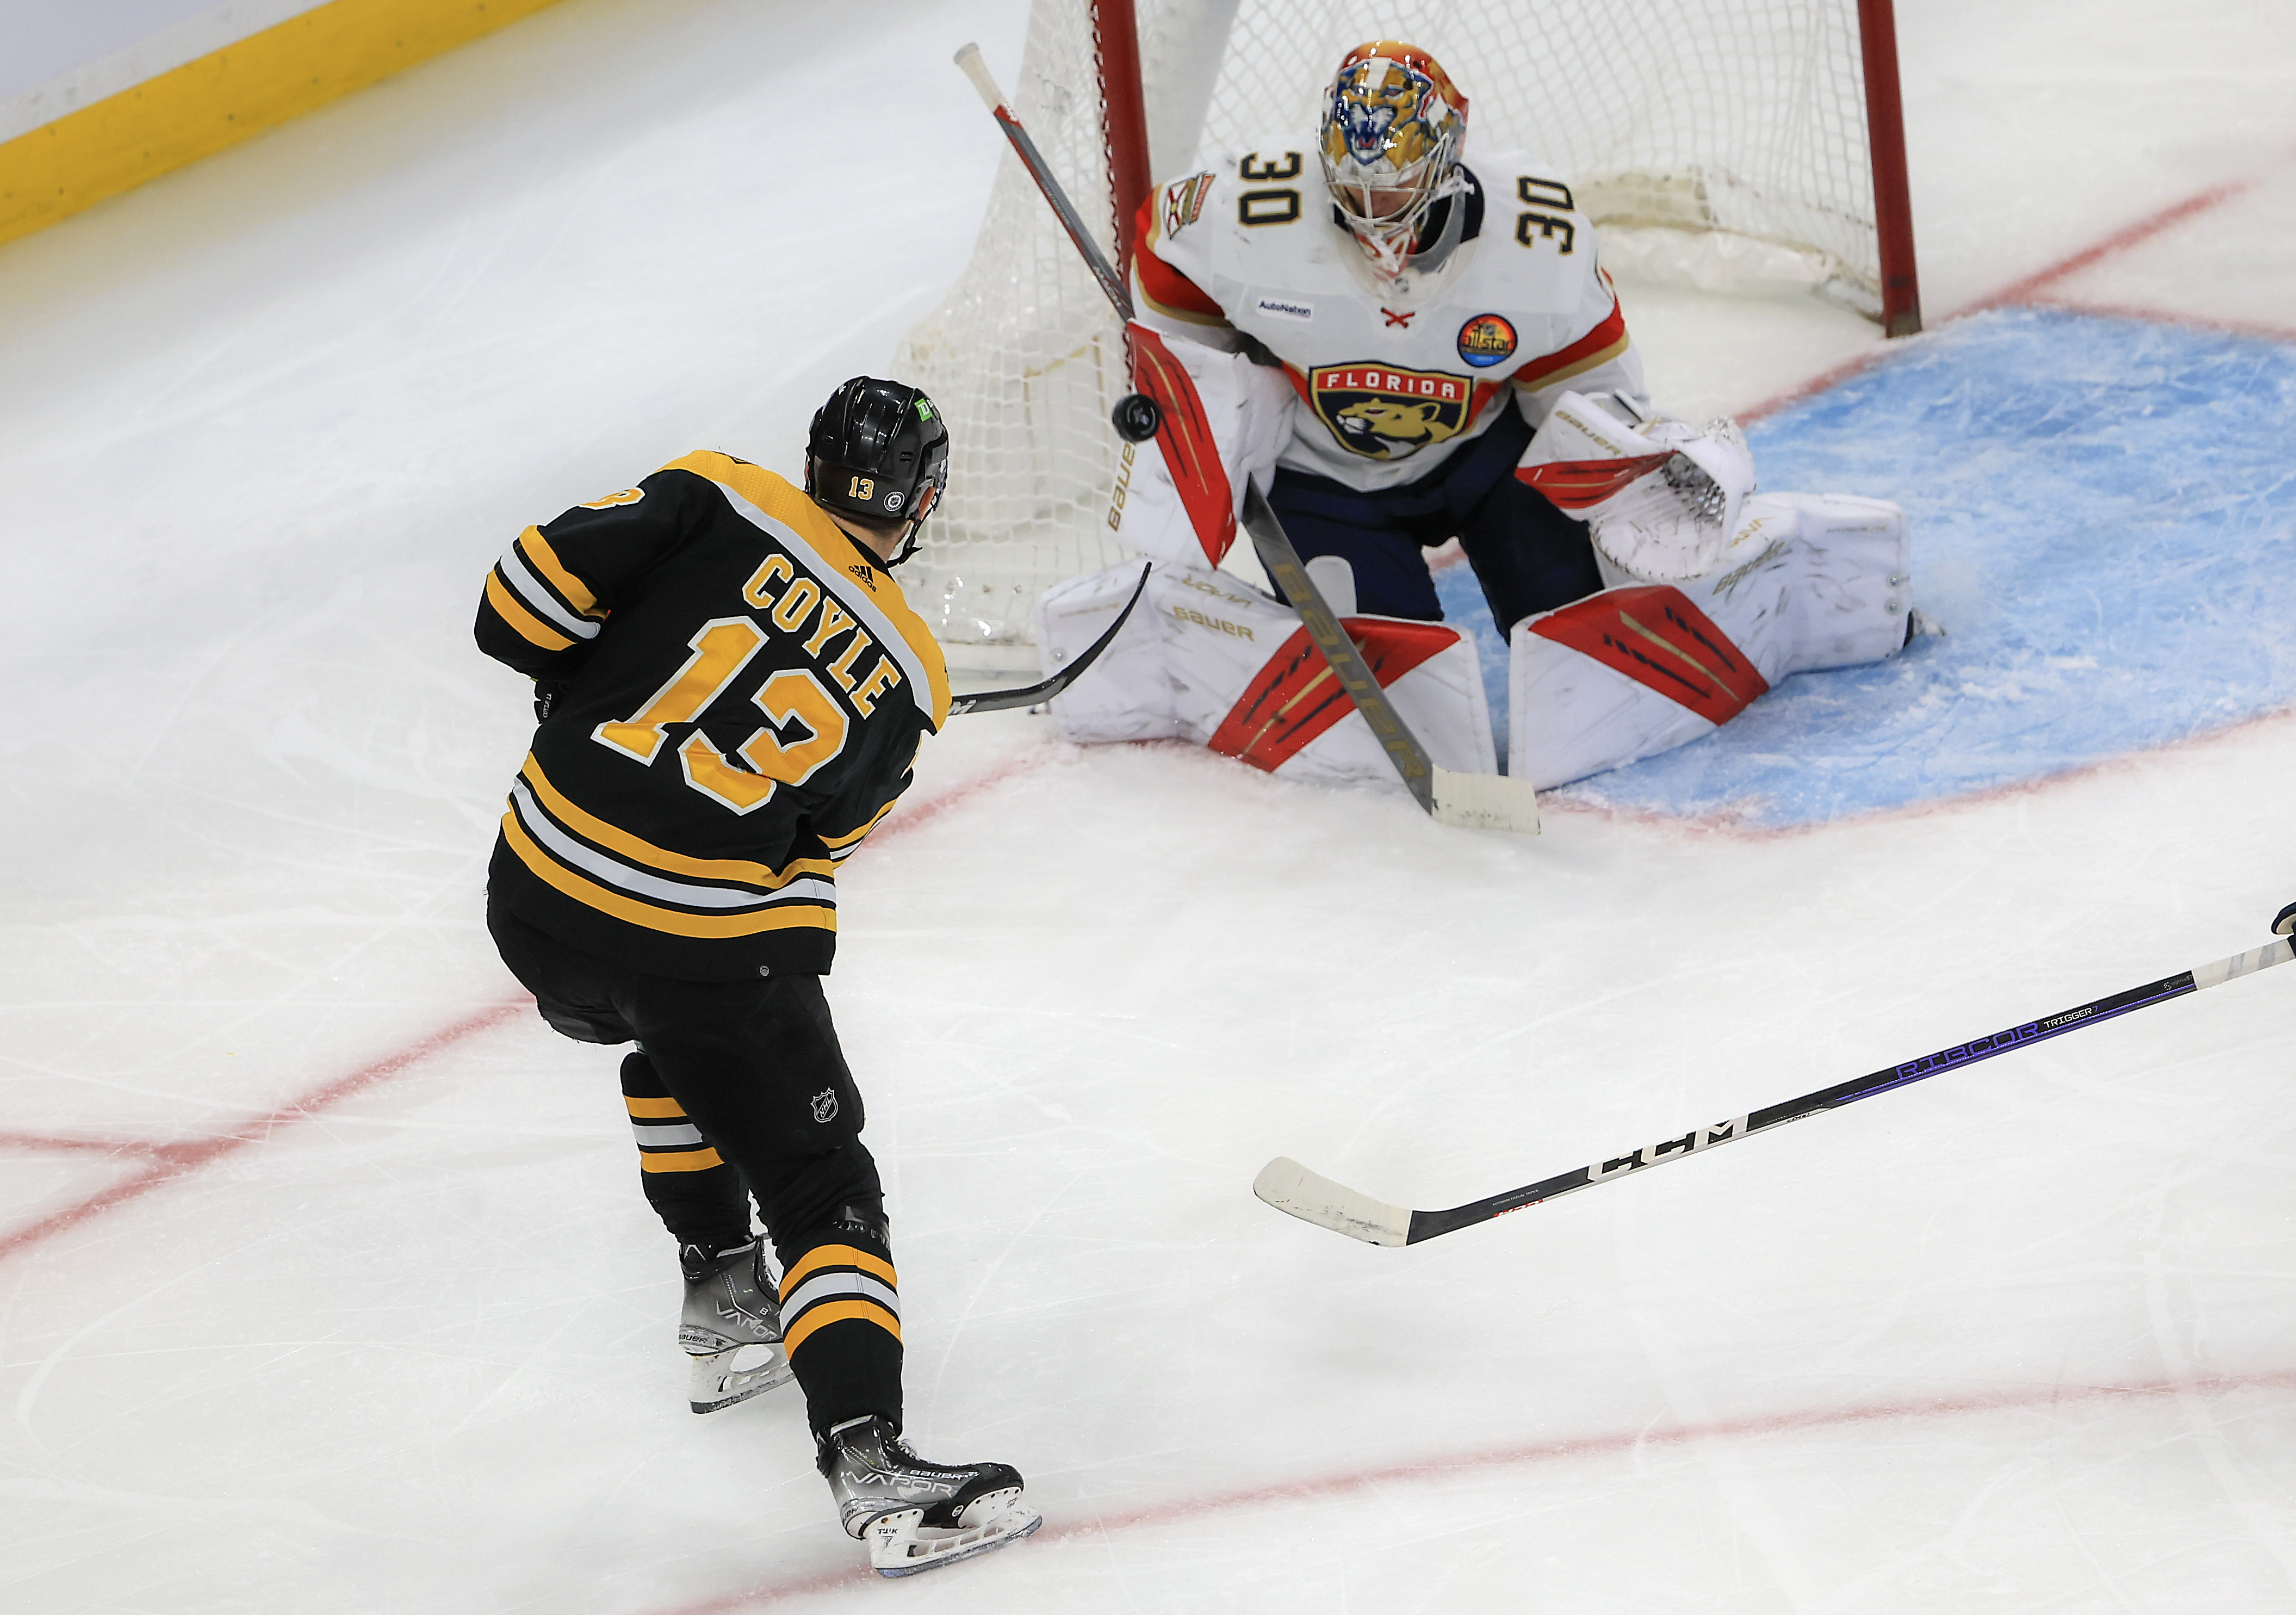 Patrice Bergeron (2 goals, 2 assists), Bruins pour it on Panthers